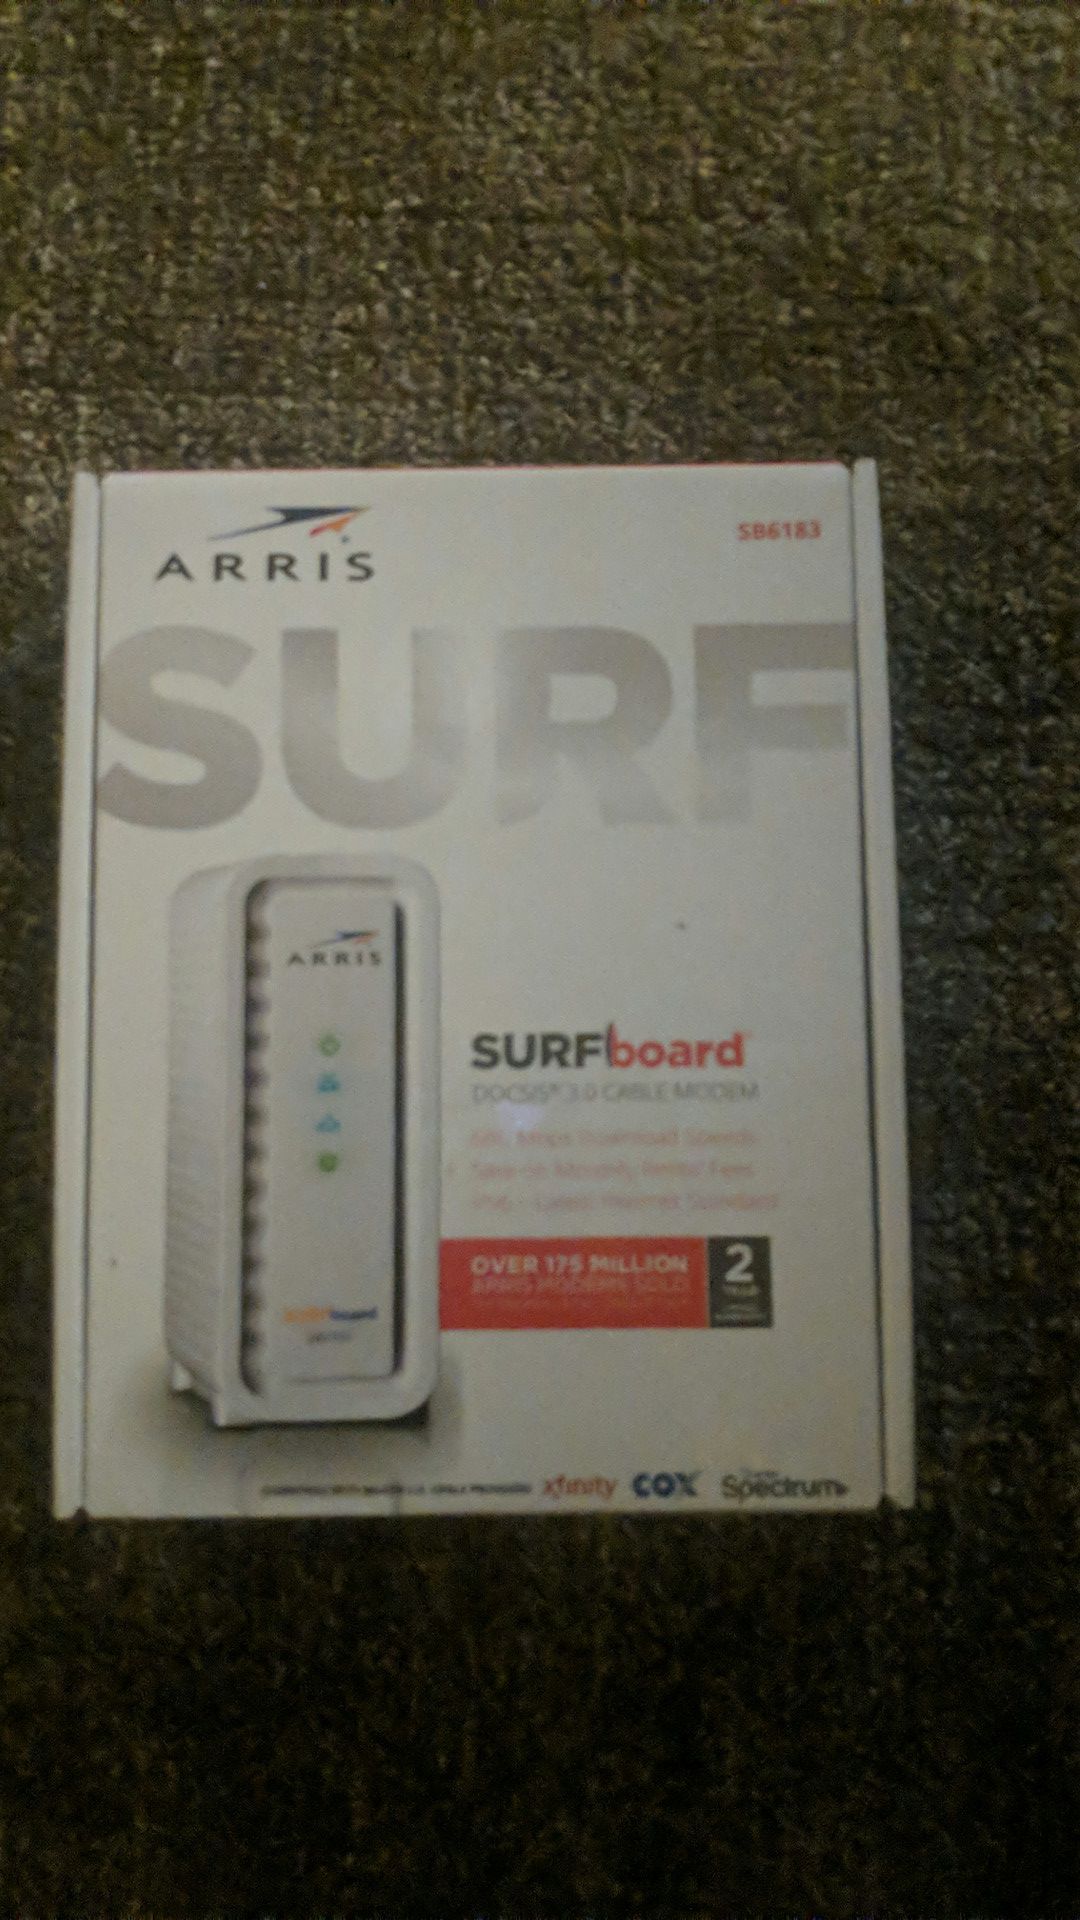 Arris surfboard modem sb6183